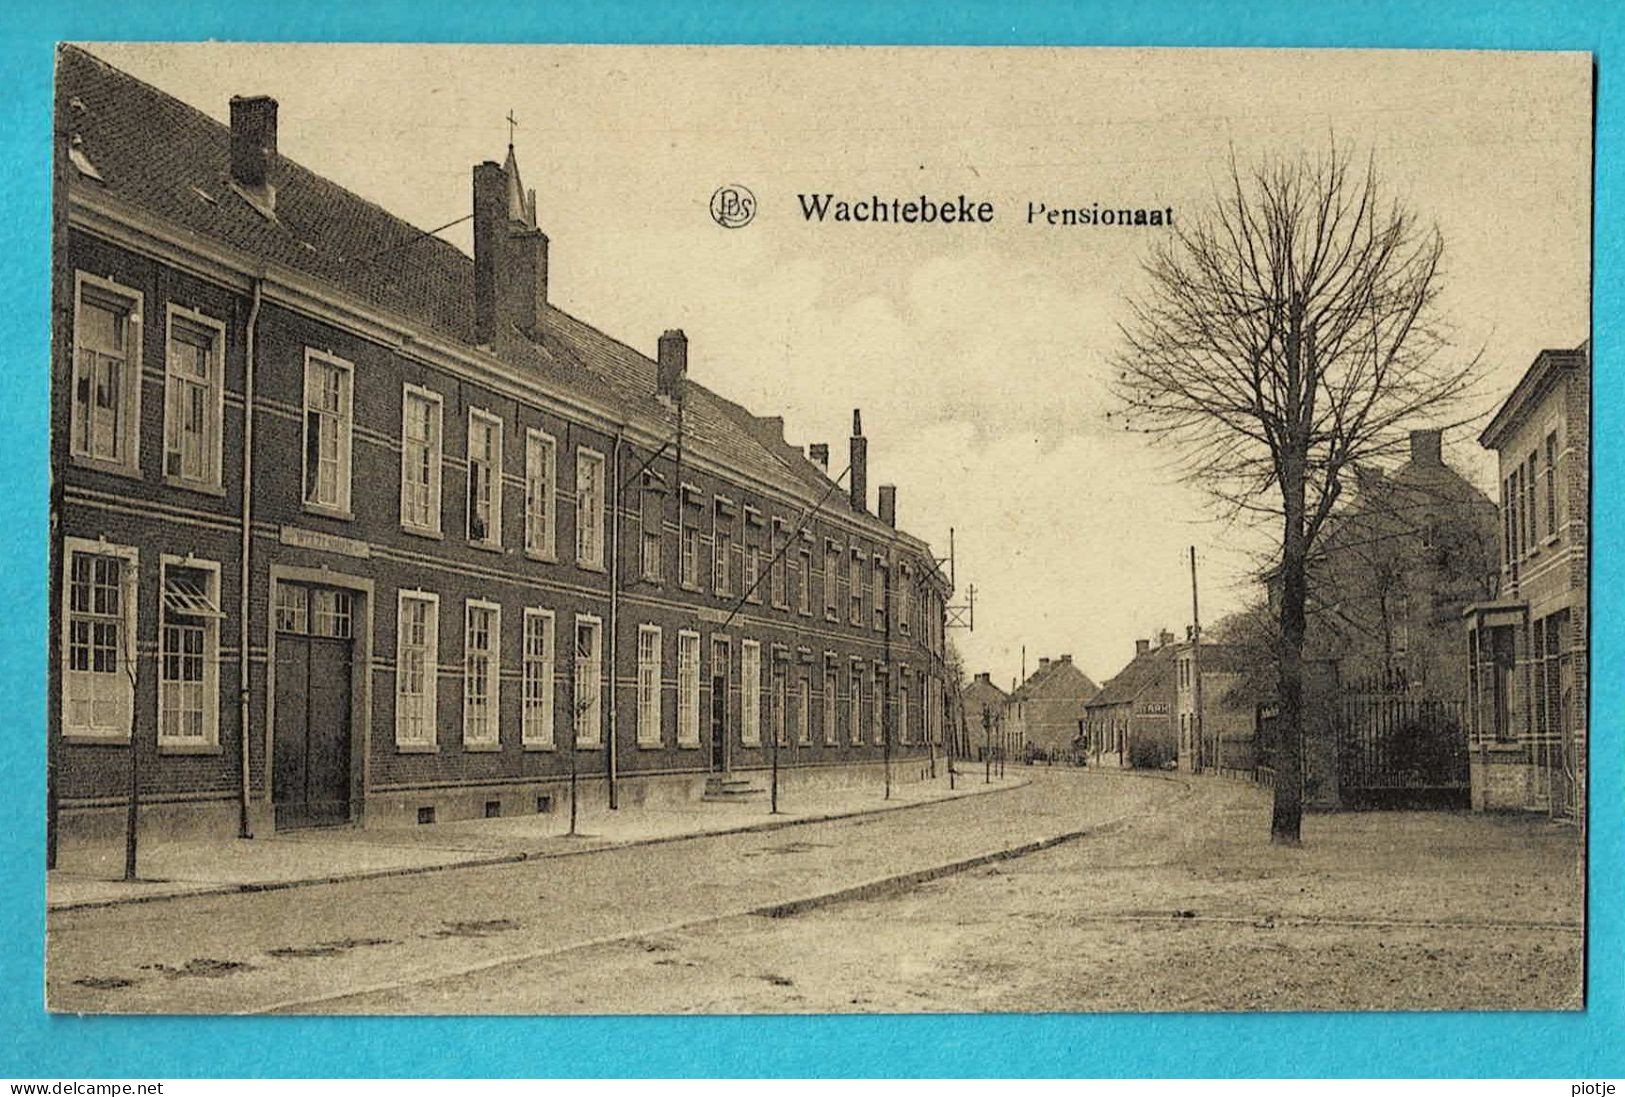 * Wachtebeke (Oost Vlaanderen) * (A. De Clercq - PDS) Pensionnat, Pensionaat, Kostschool, Façade, Old, Rare - Wachtebeke